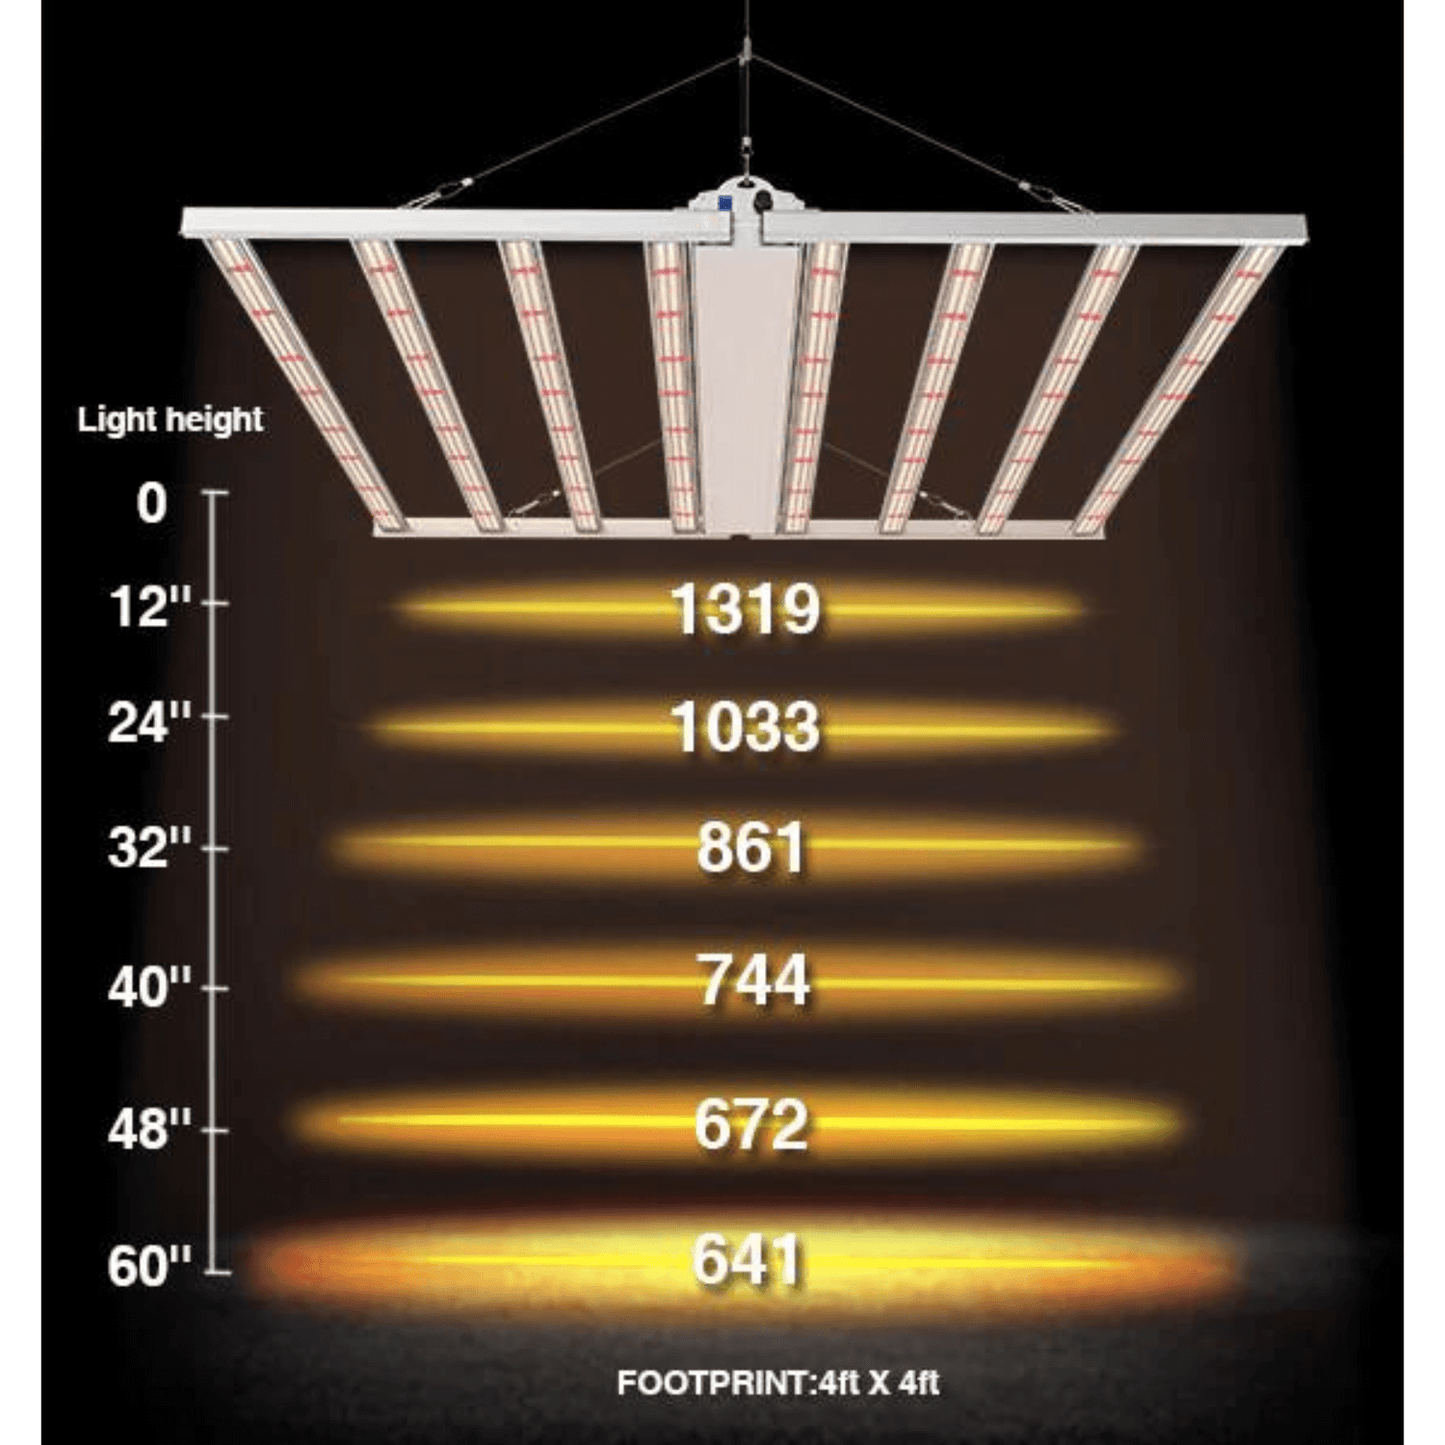 Medic Grow Fold-8 720W Full Spectrum LED Grow Light | Fold-8 | Grow Tents Depot | Grow Lights |